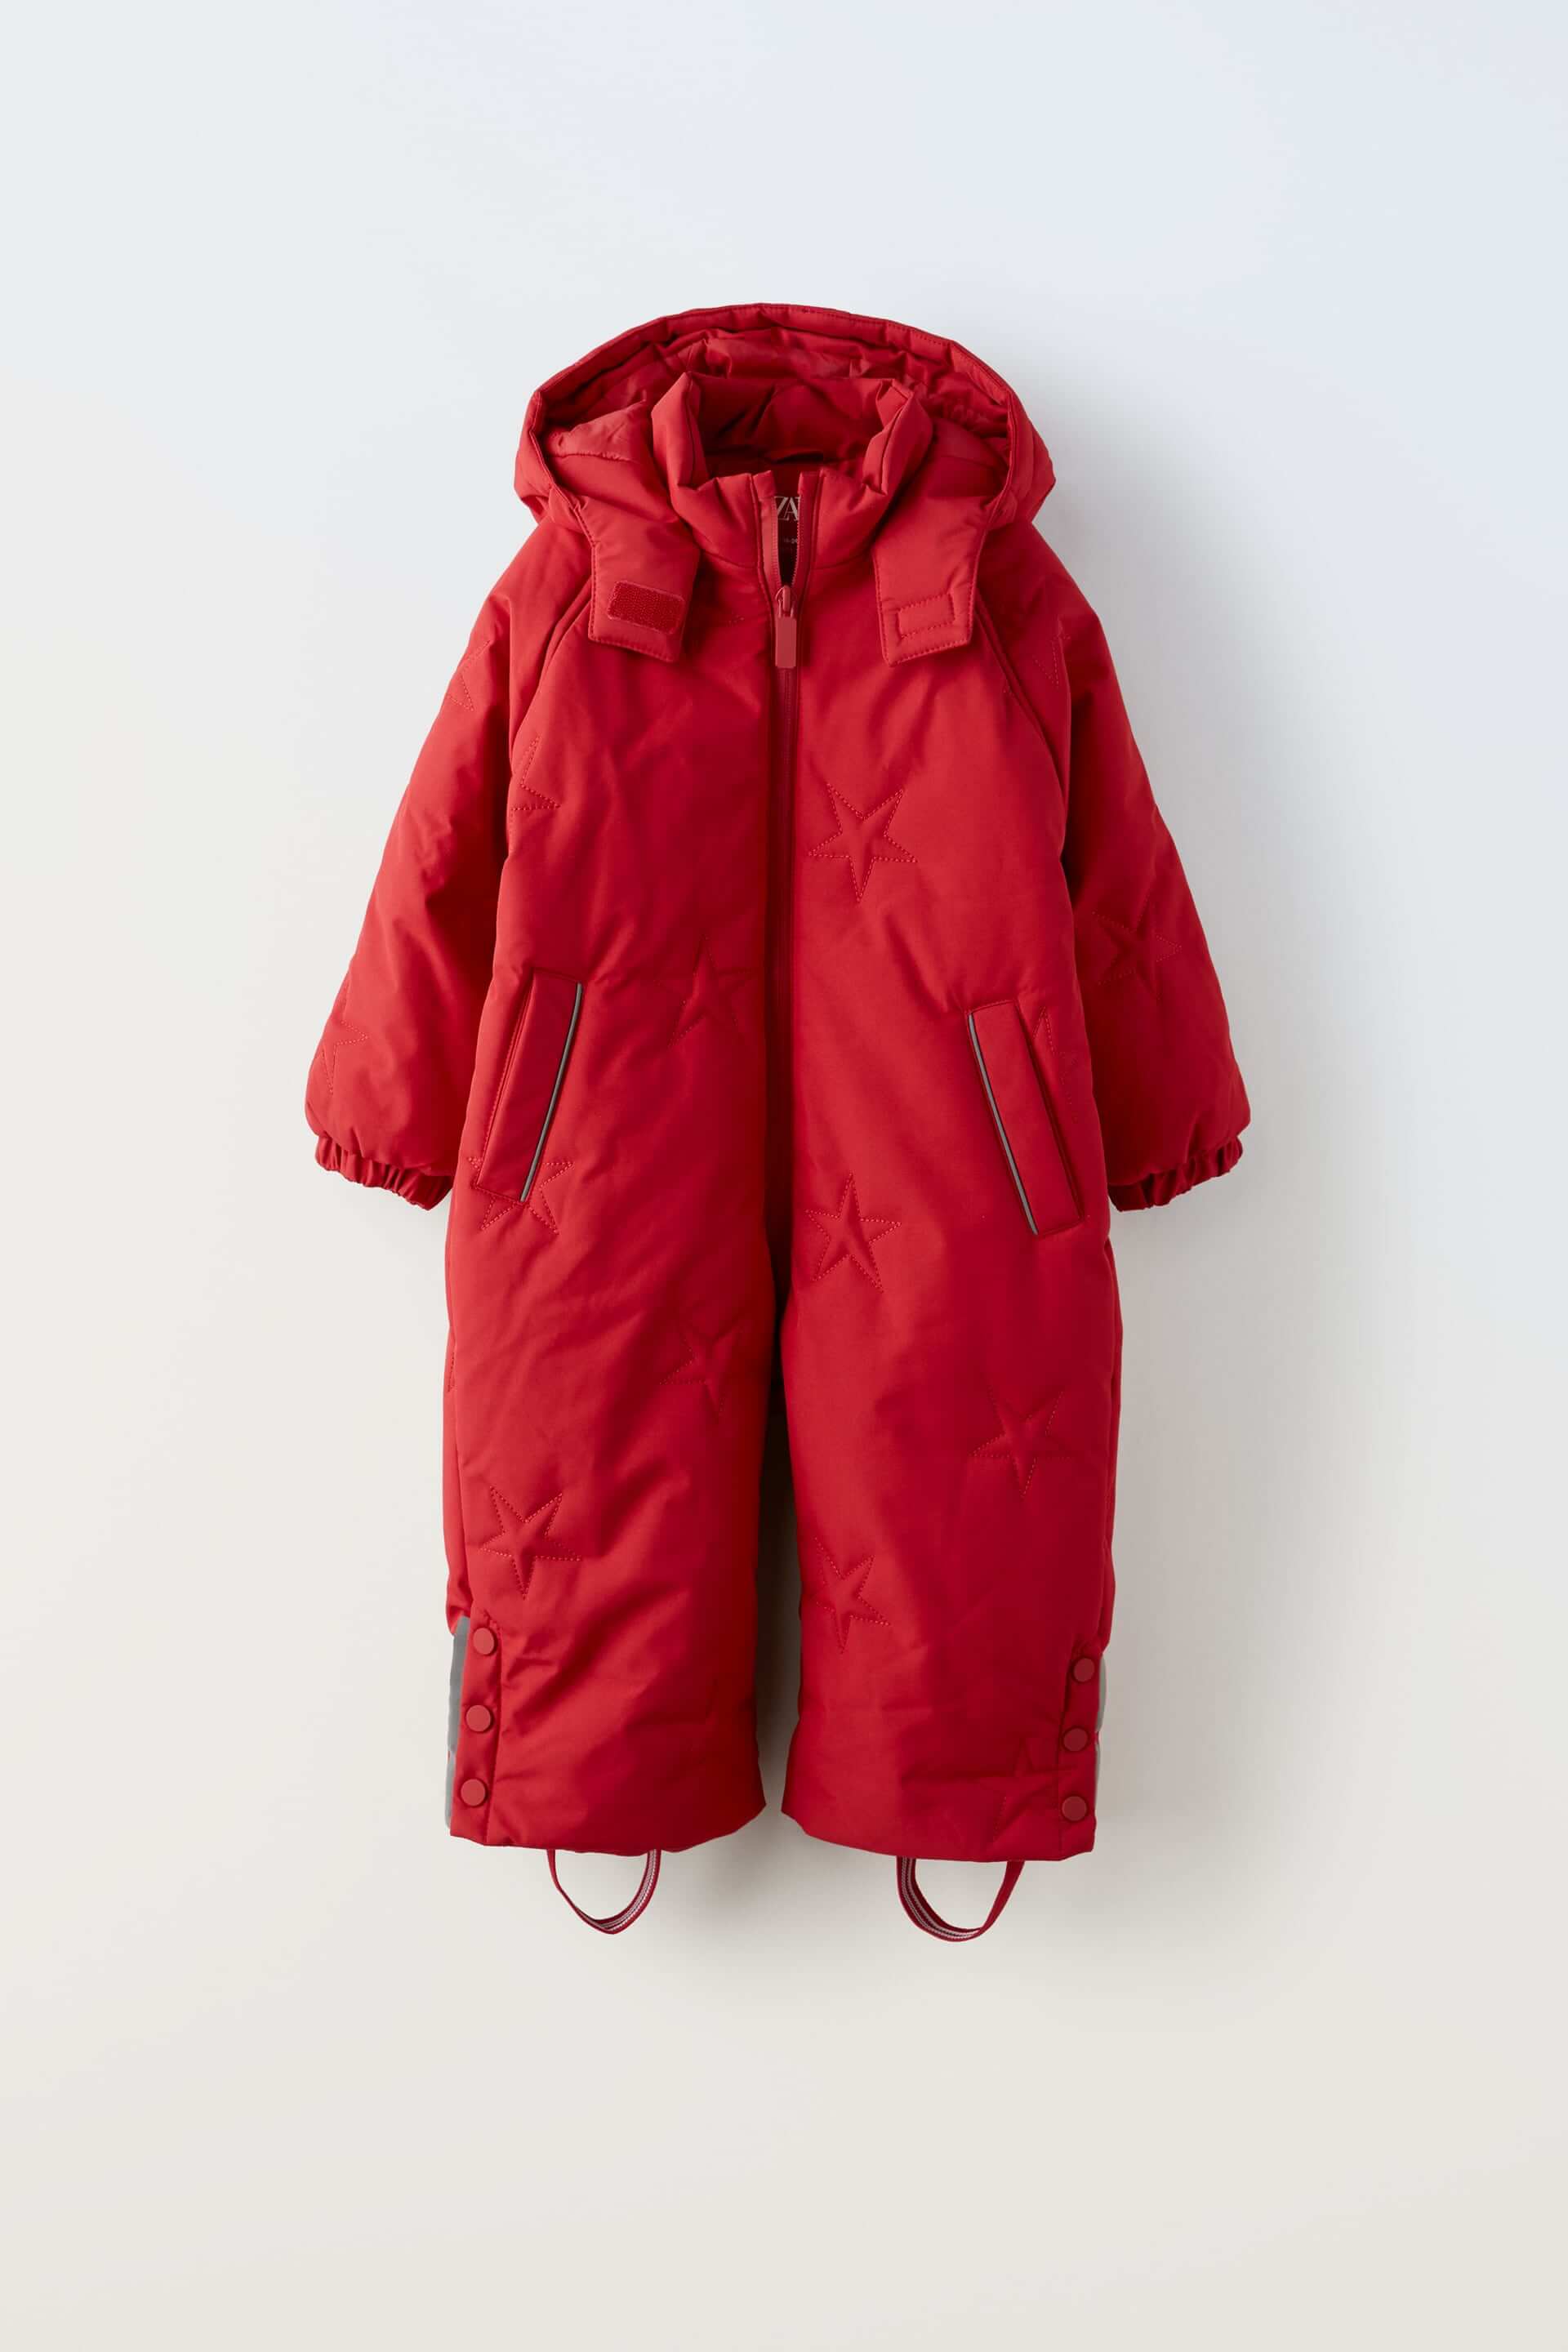 Комбинезон детский Zara Water-repellent And Wind-protection, красный куртка утепленная zara water and wind protection серо коричневый